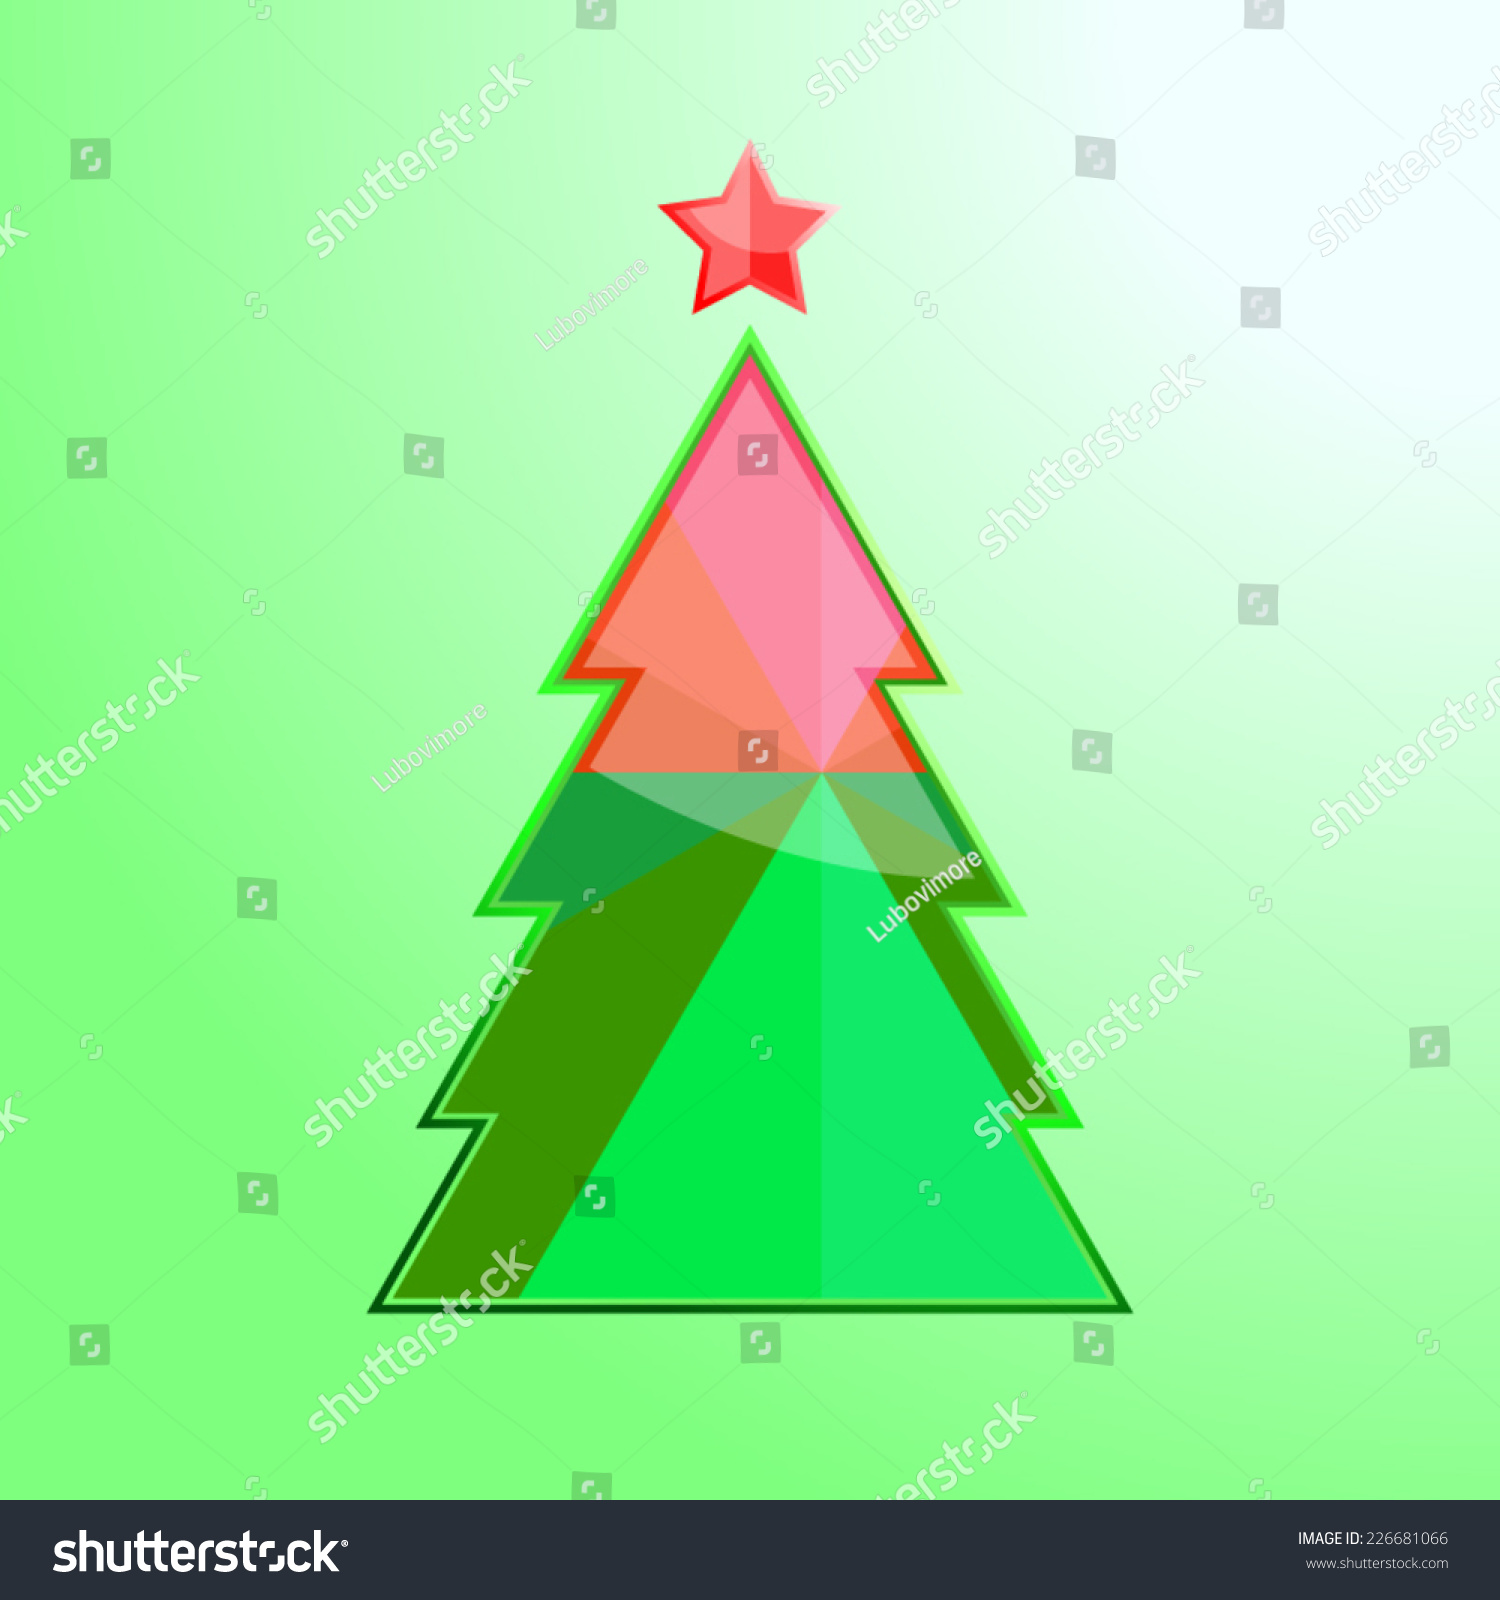 Christmas Tree Illustration. - 226681066 : Shutterstock